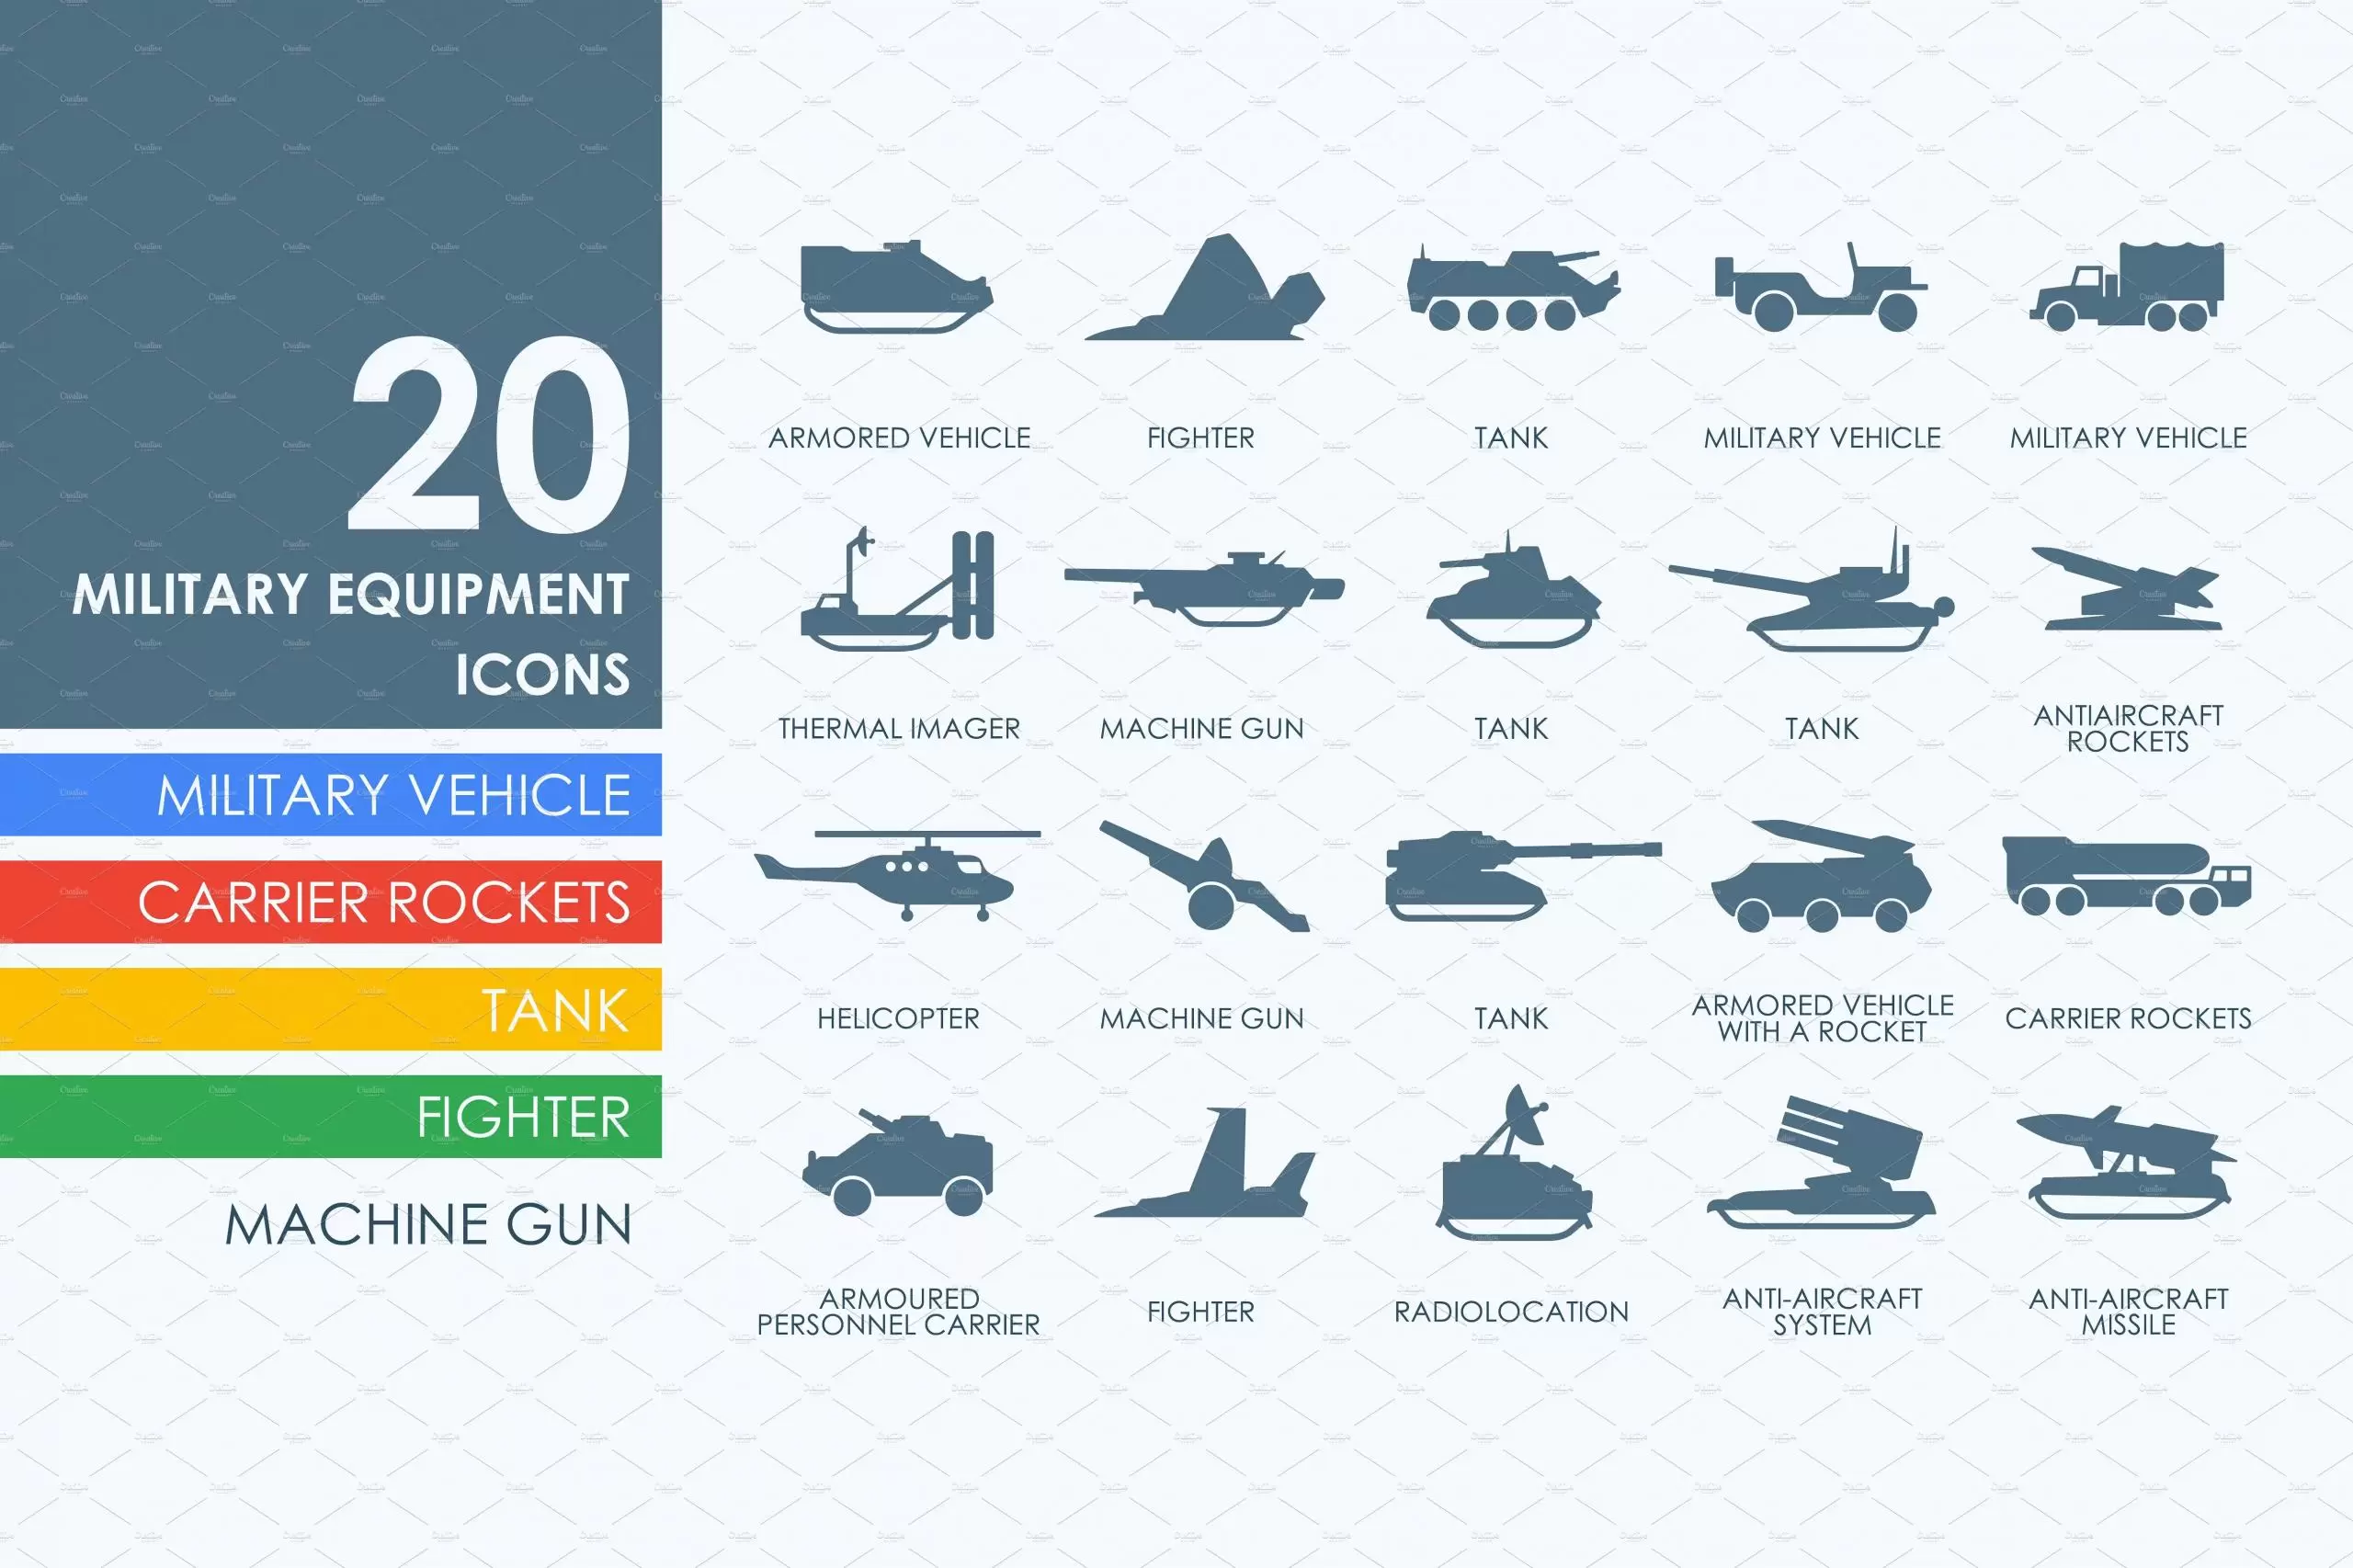 军事装备图标素材 20 military equipment icons插图